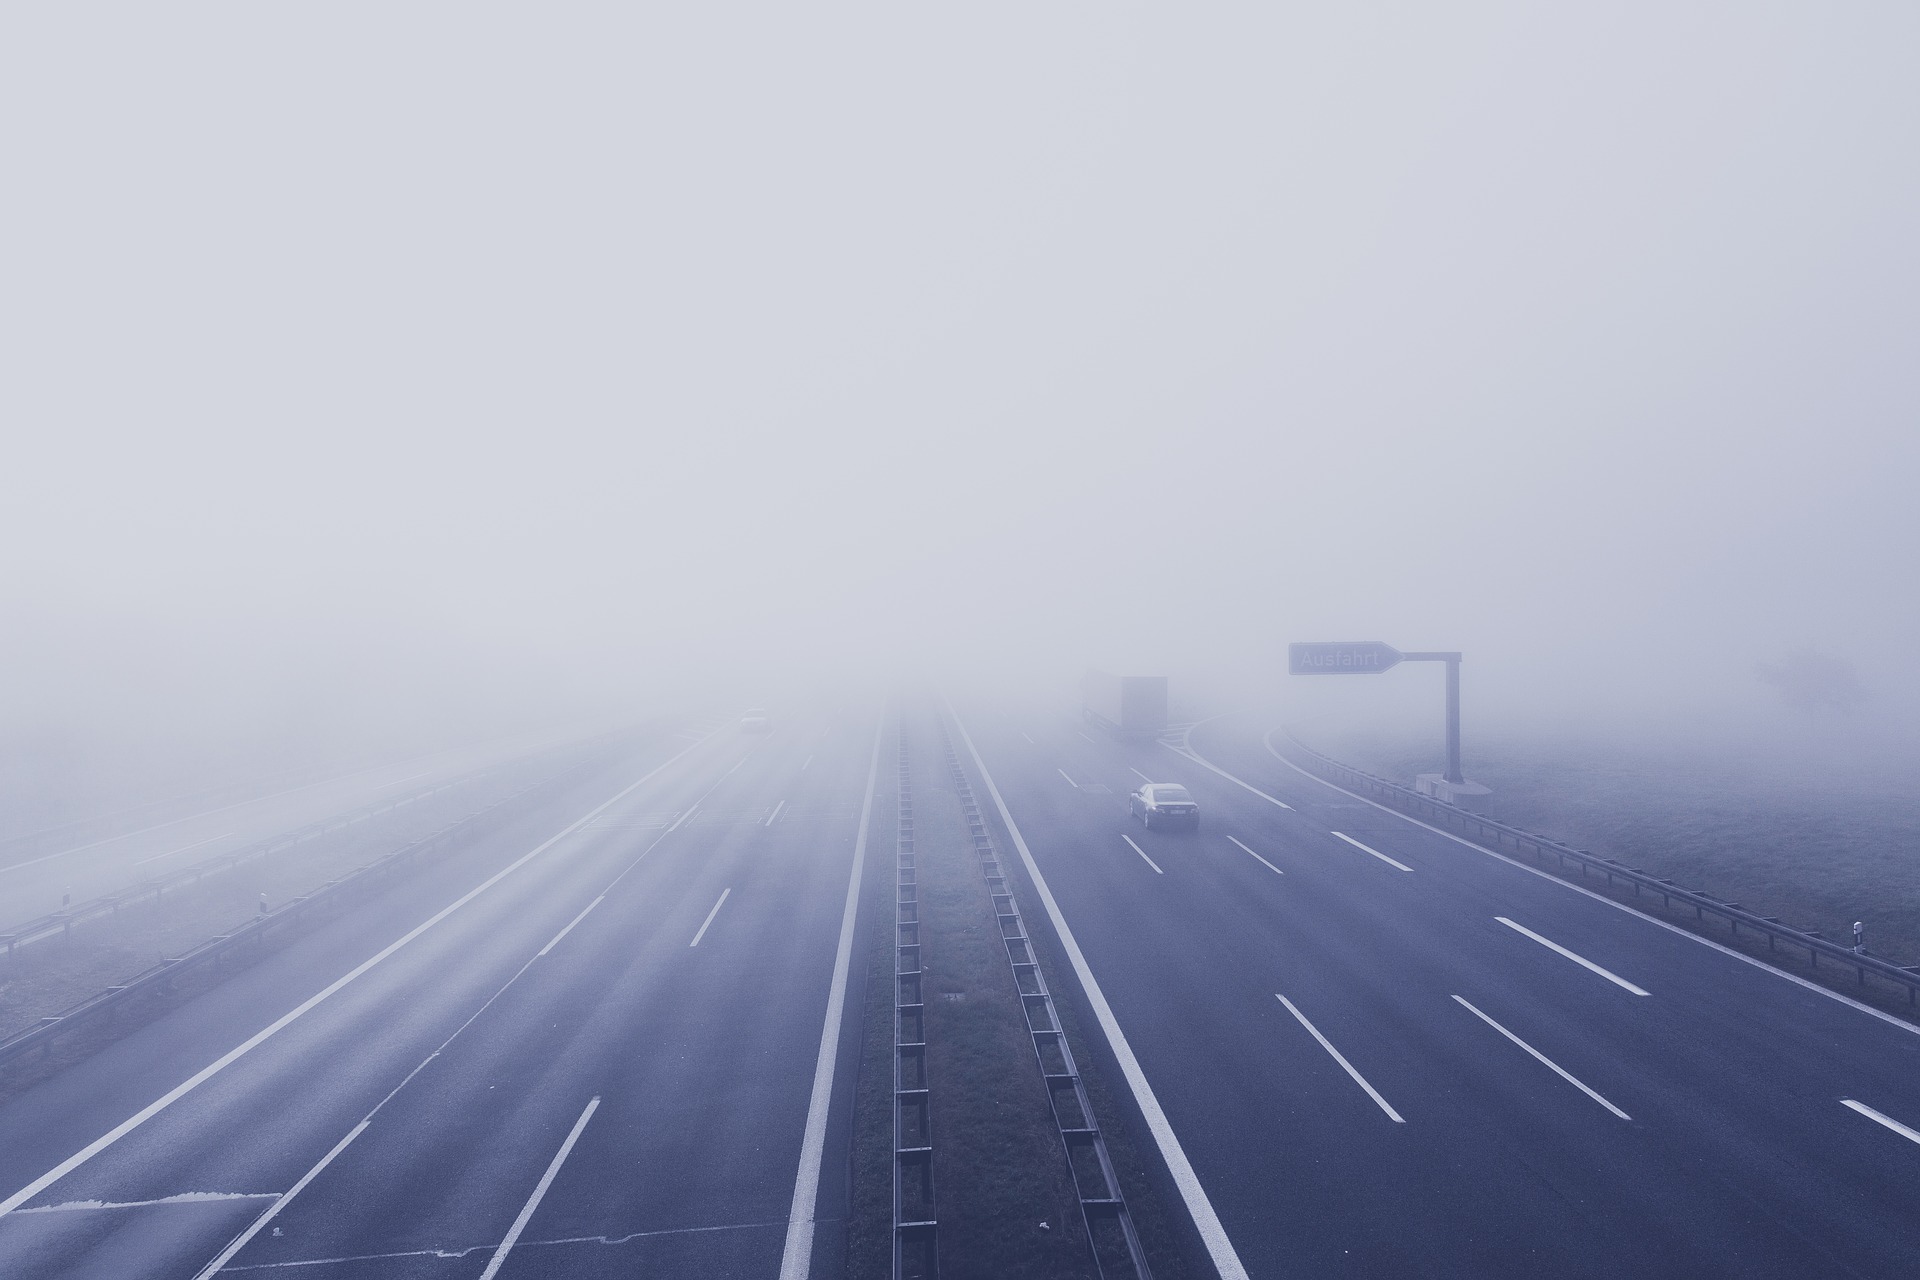 Autobahn im Nebel